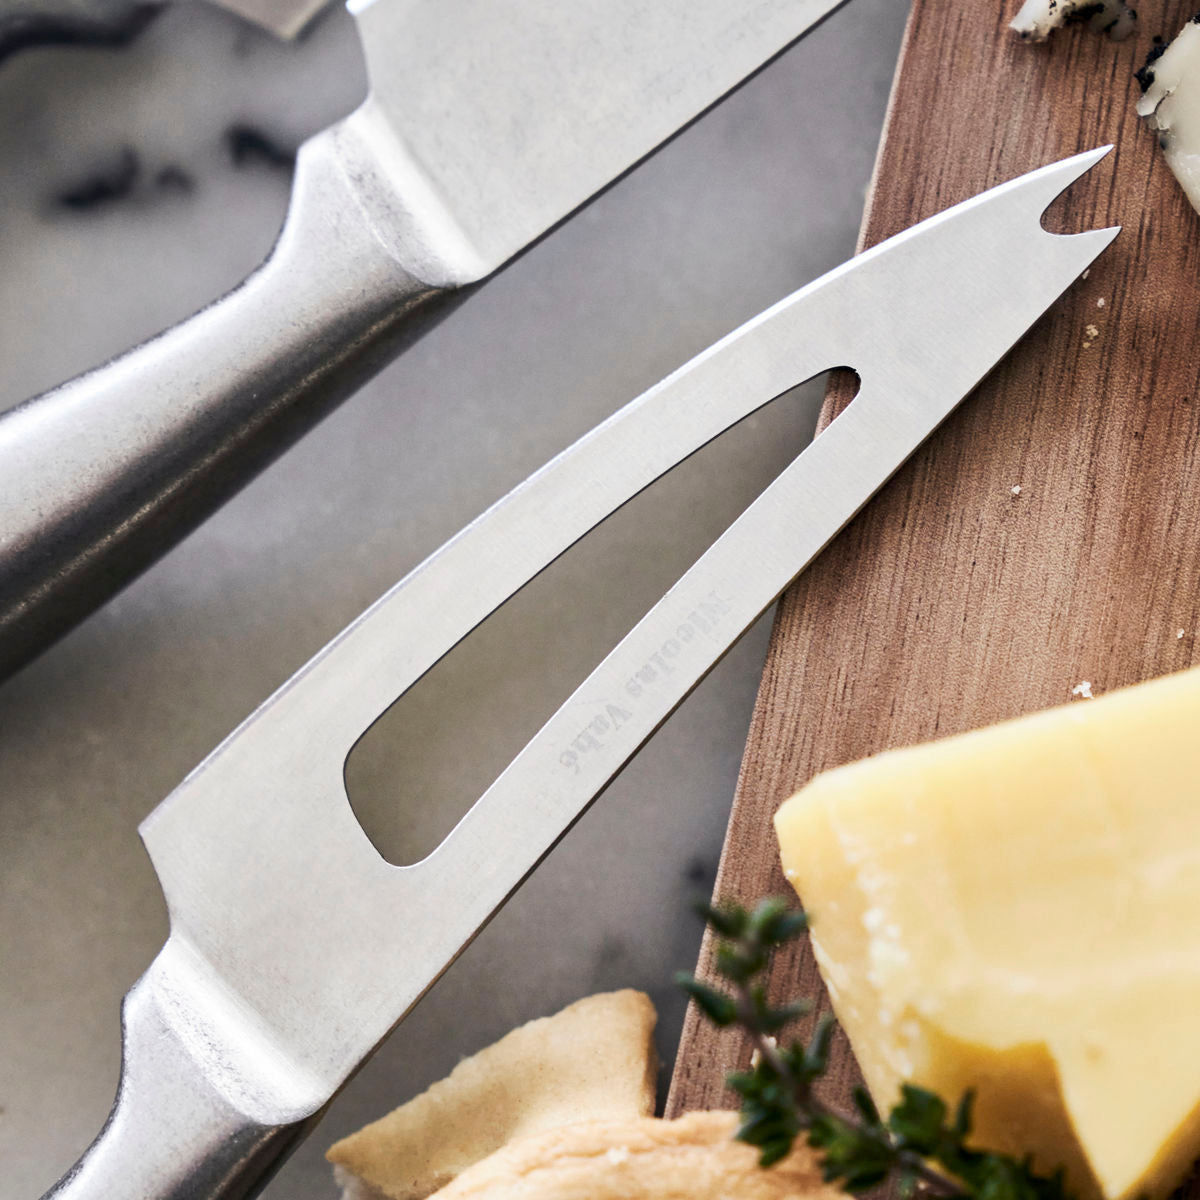 Nicolas Vahe Cheese knives, NVFromage, Silver finish